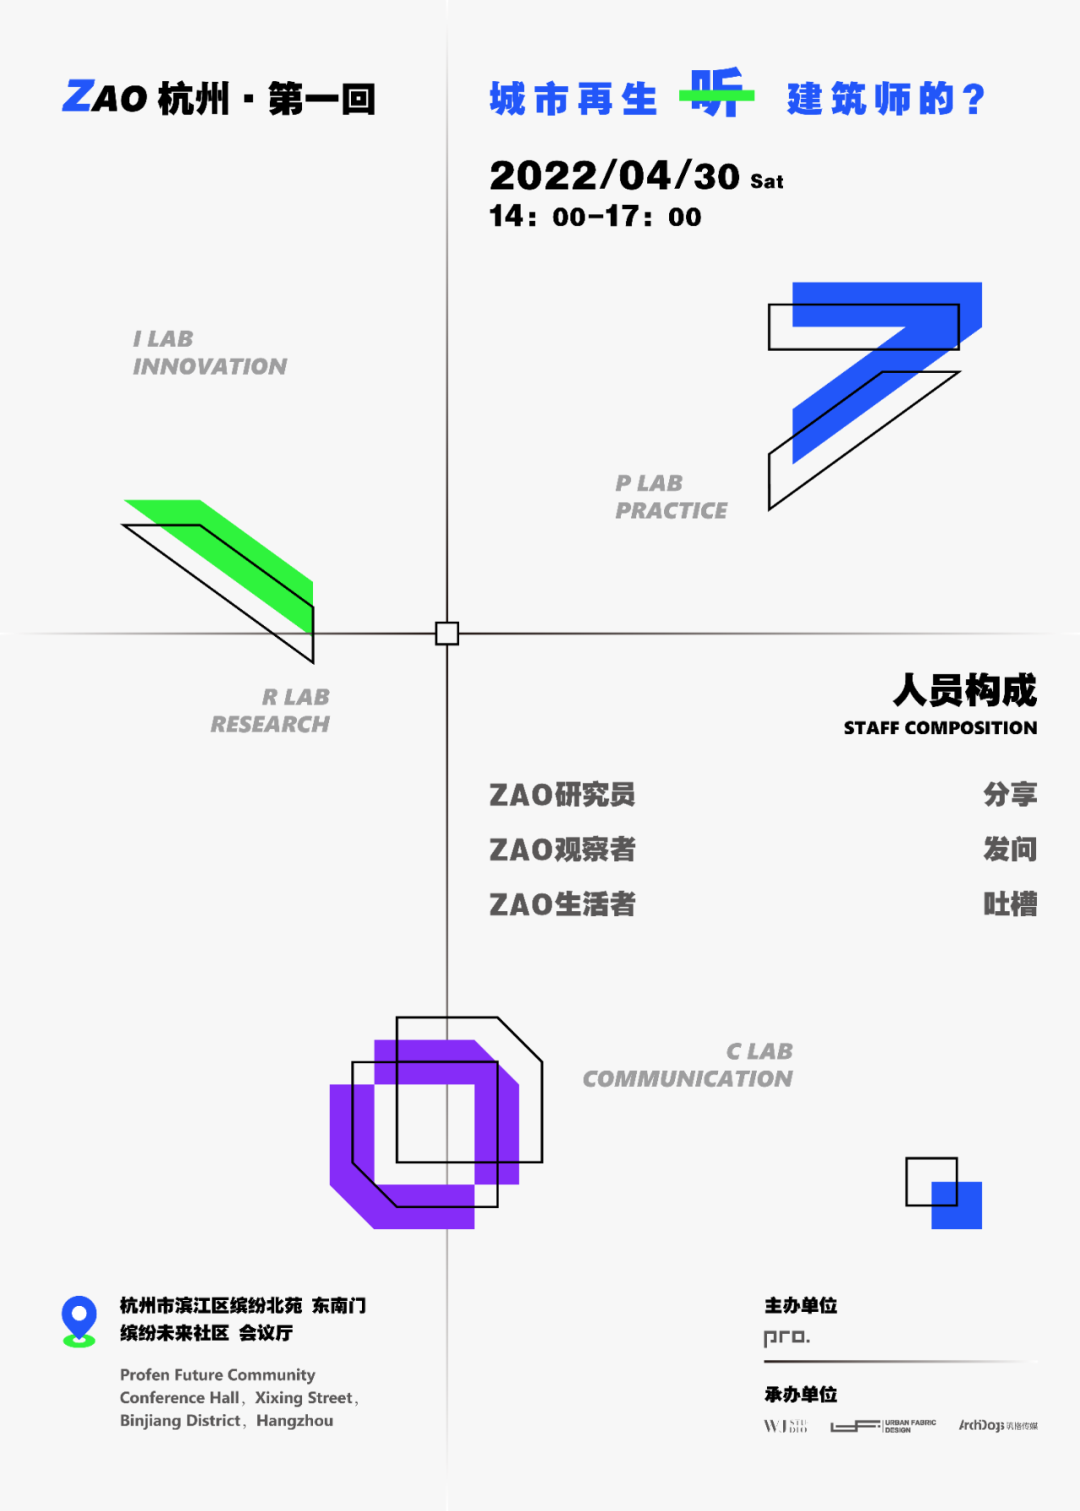 ZAO杭州 城市再生｜校园更新 x 科技创新： 城市策划营造智慧校园1.png